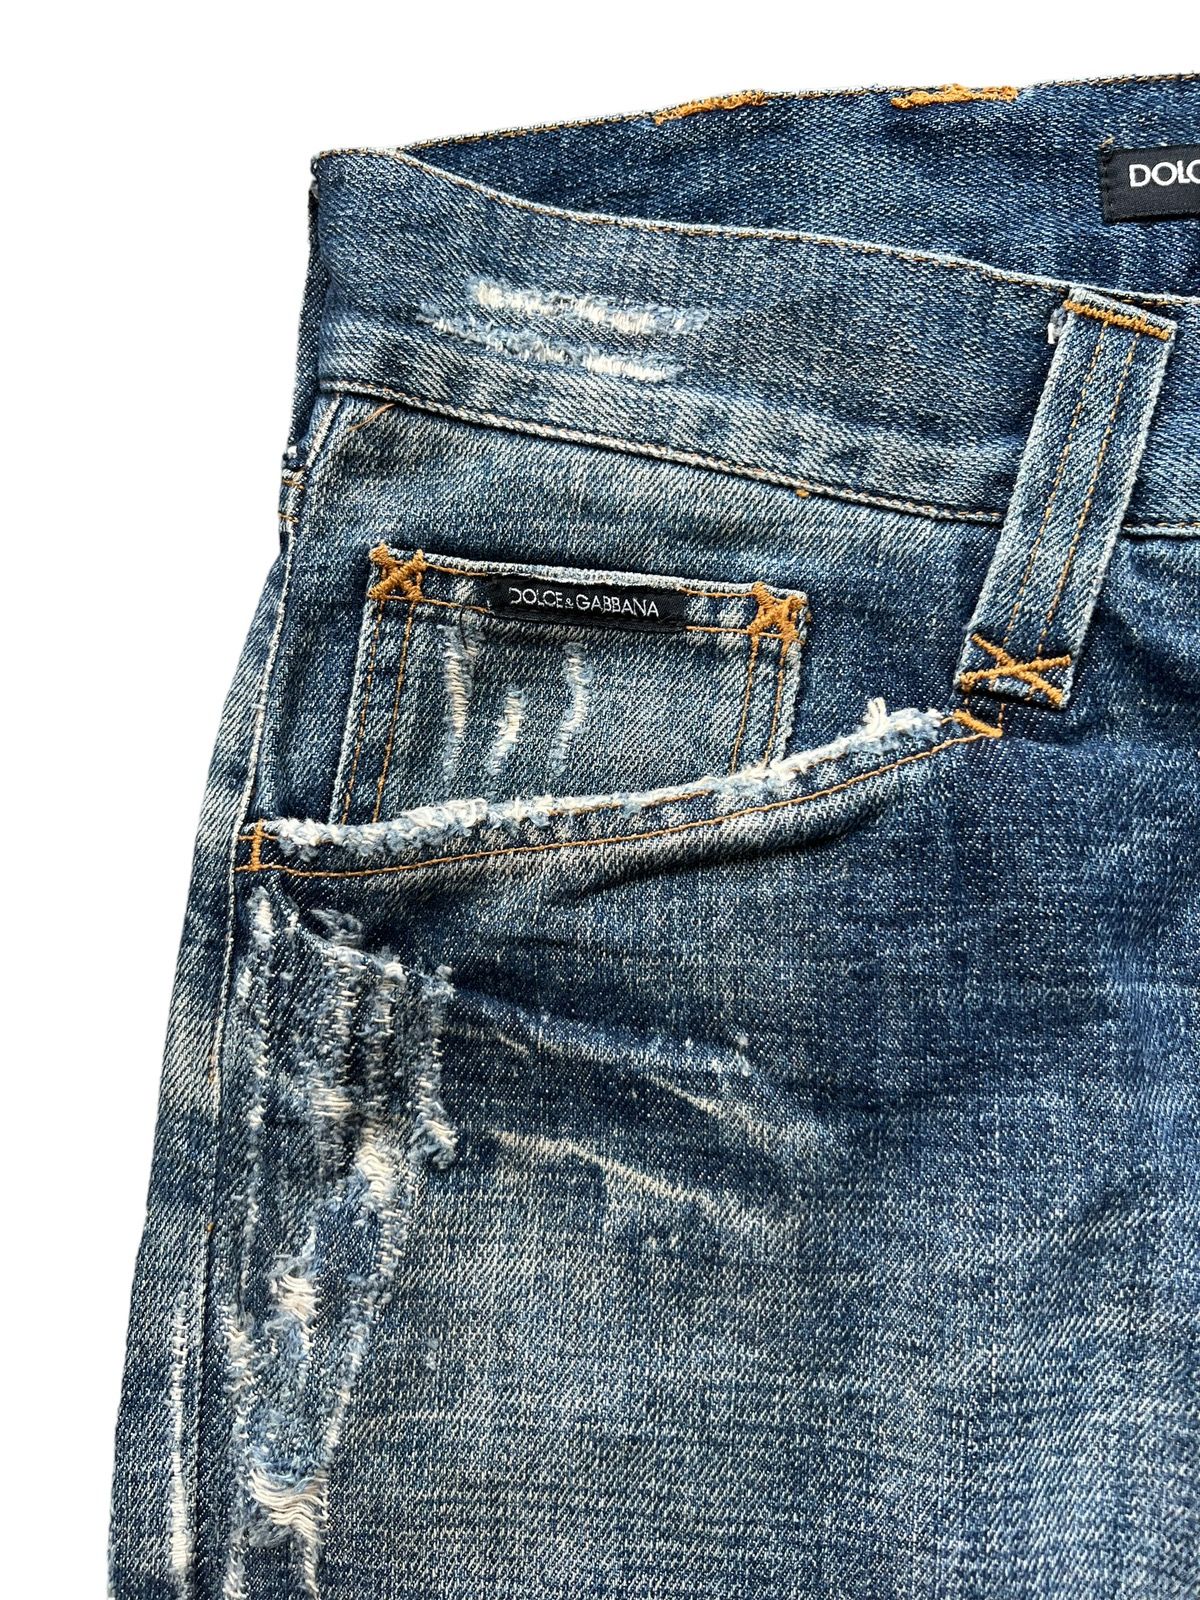 Dolce and Gabbana Crash Distressed Denim Jeans 31x32.5 - 11